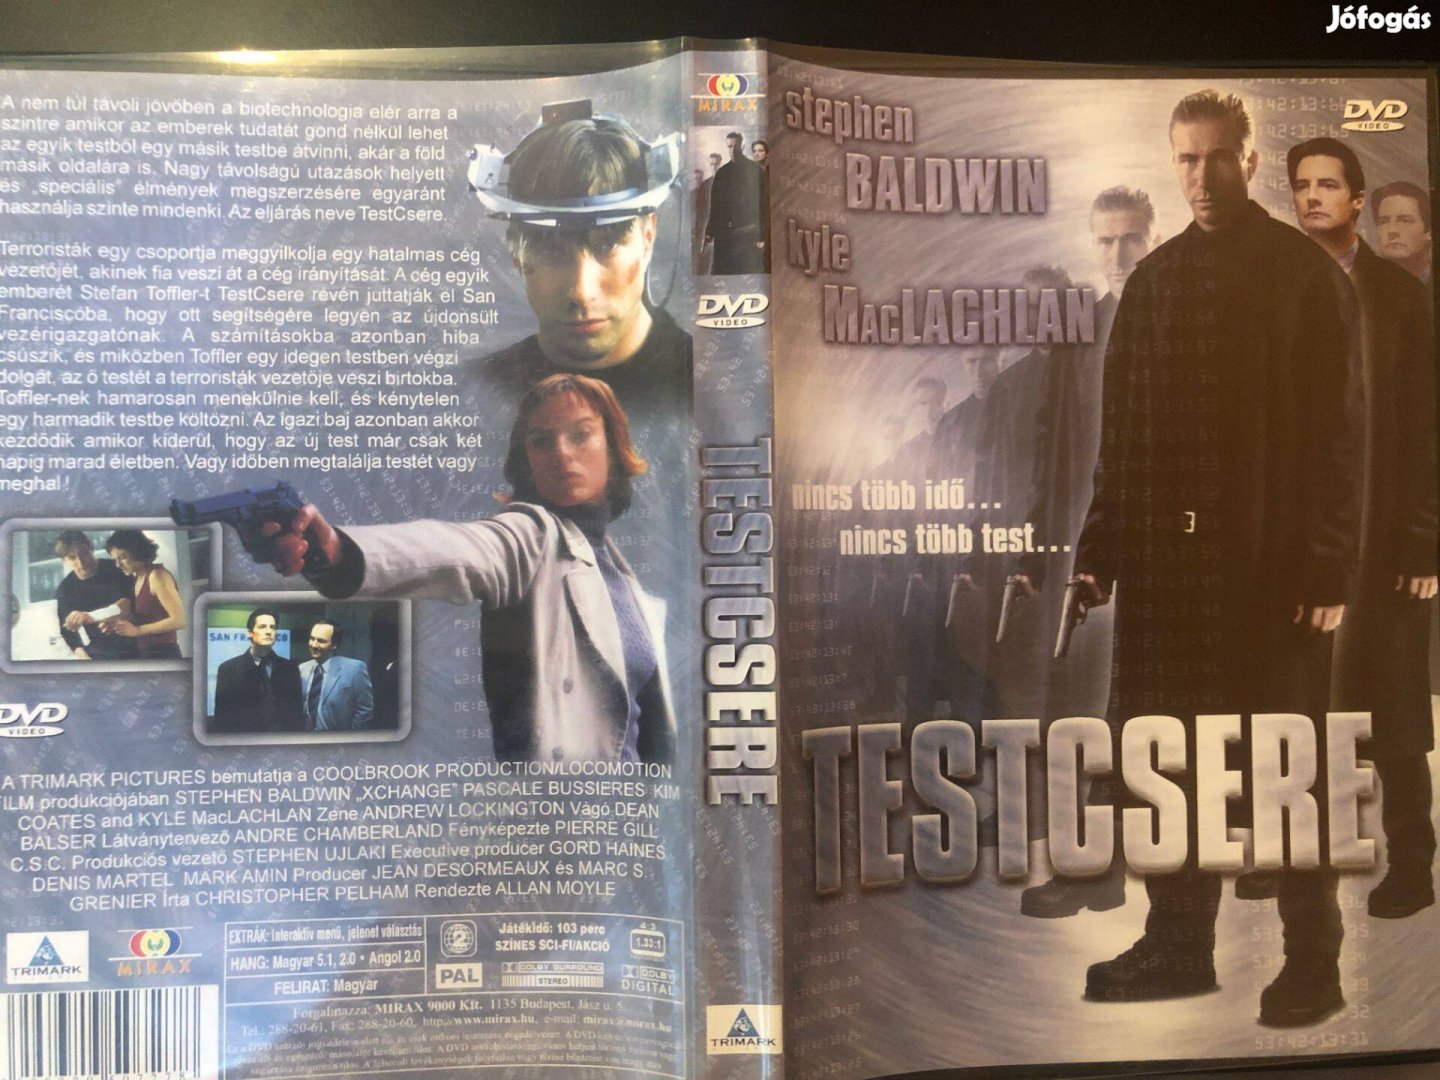 Testcsere (karcmentes, Stephen Baldwin) DVD